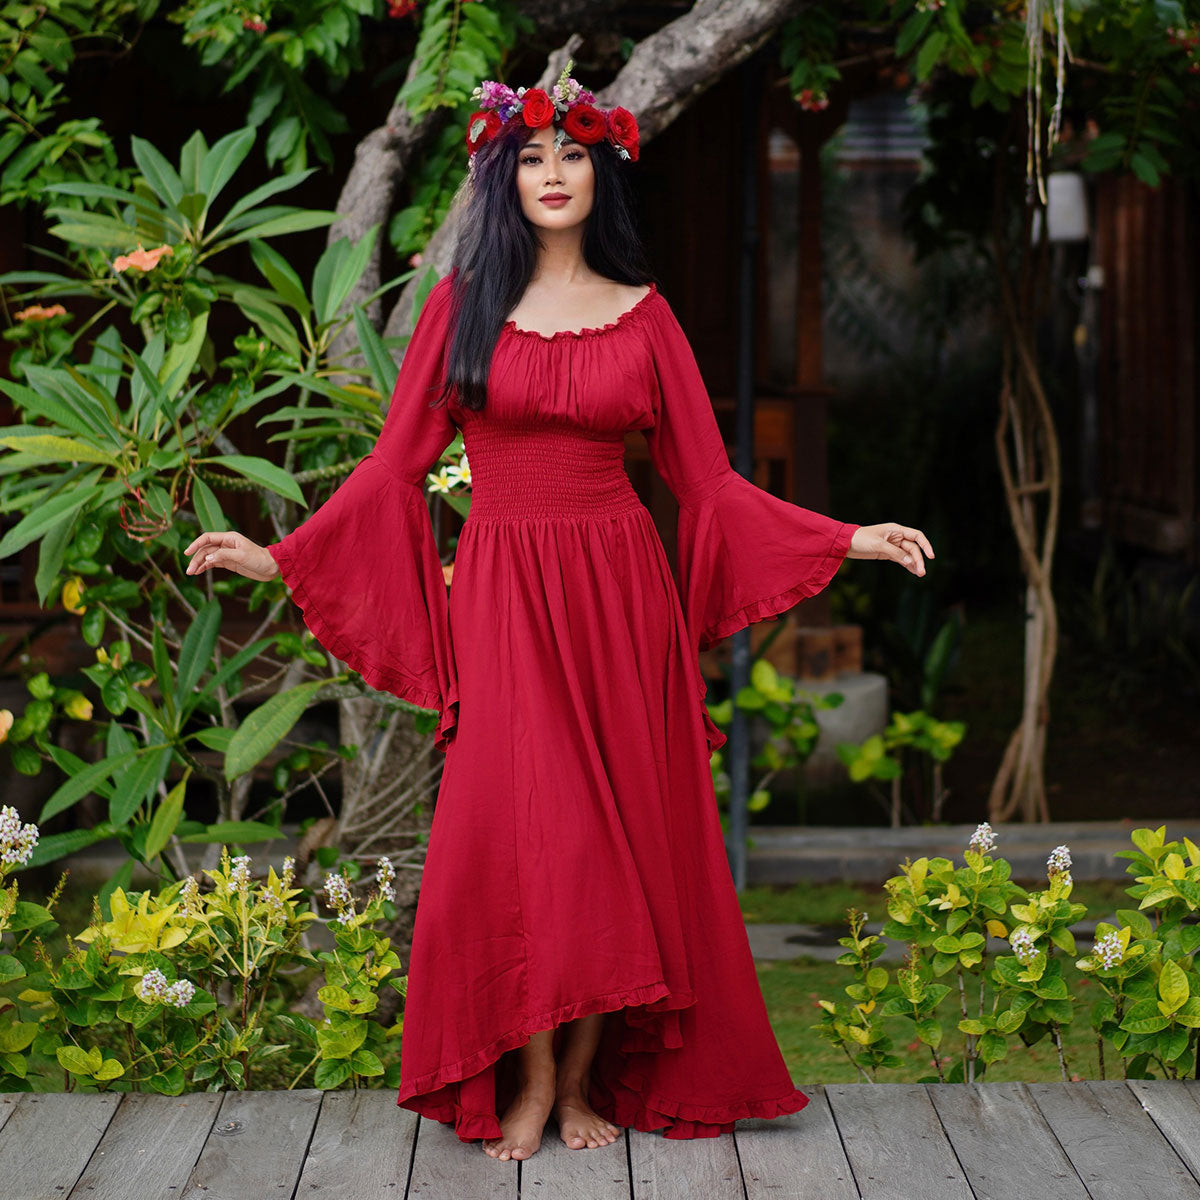 Kahlani CottageGoth Ren Faire Maxi Dress - The Bohemian Closet